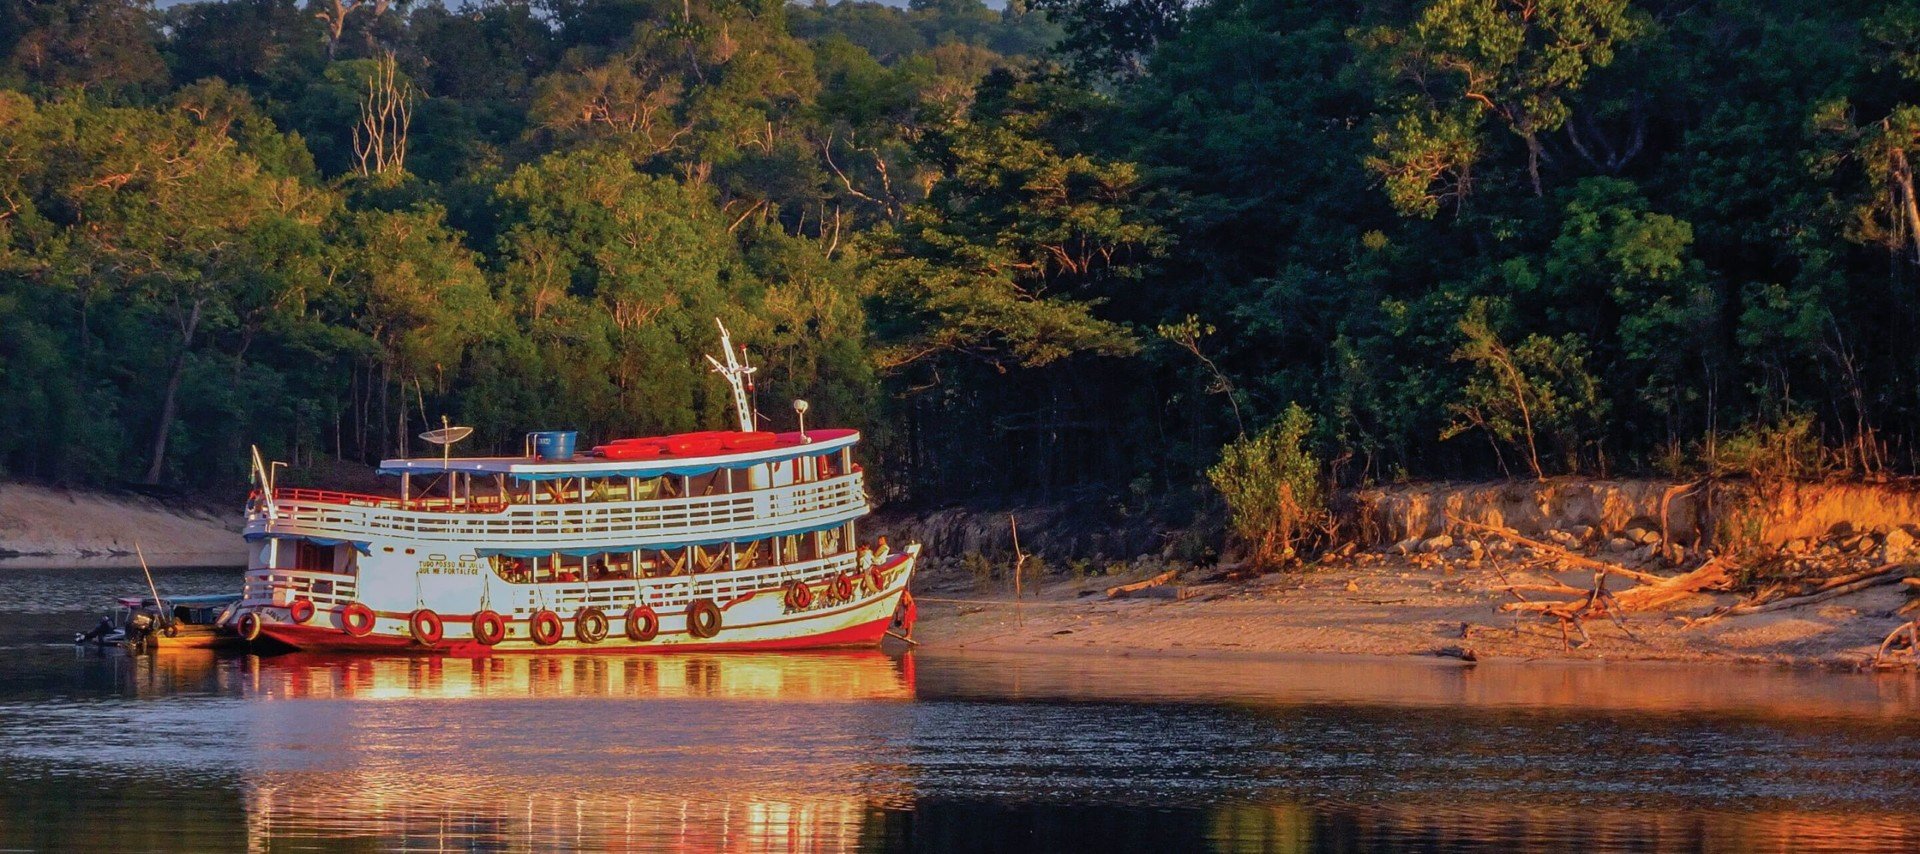 Manaus in dating anniversary Tourist information